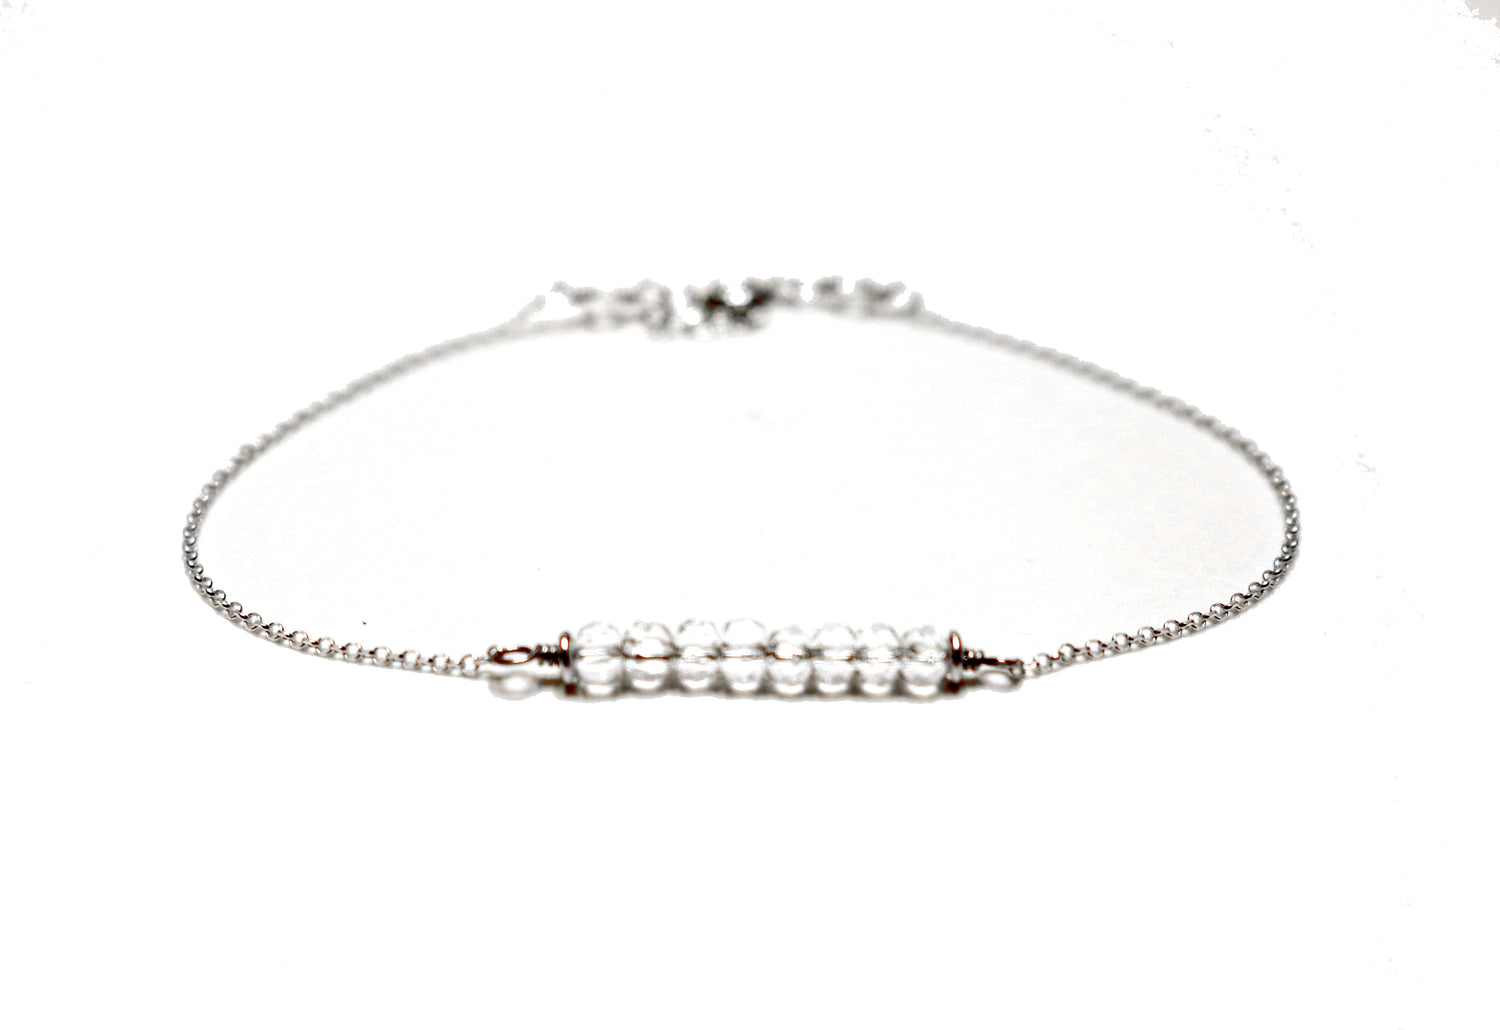 Quartz Crystal Bracelet, Personalized Letter Initial Name Bracelet, Gemstone Bar Bracelet, Birthstone Jewelry, Handmade Sterling Silver Adjustable